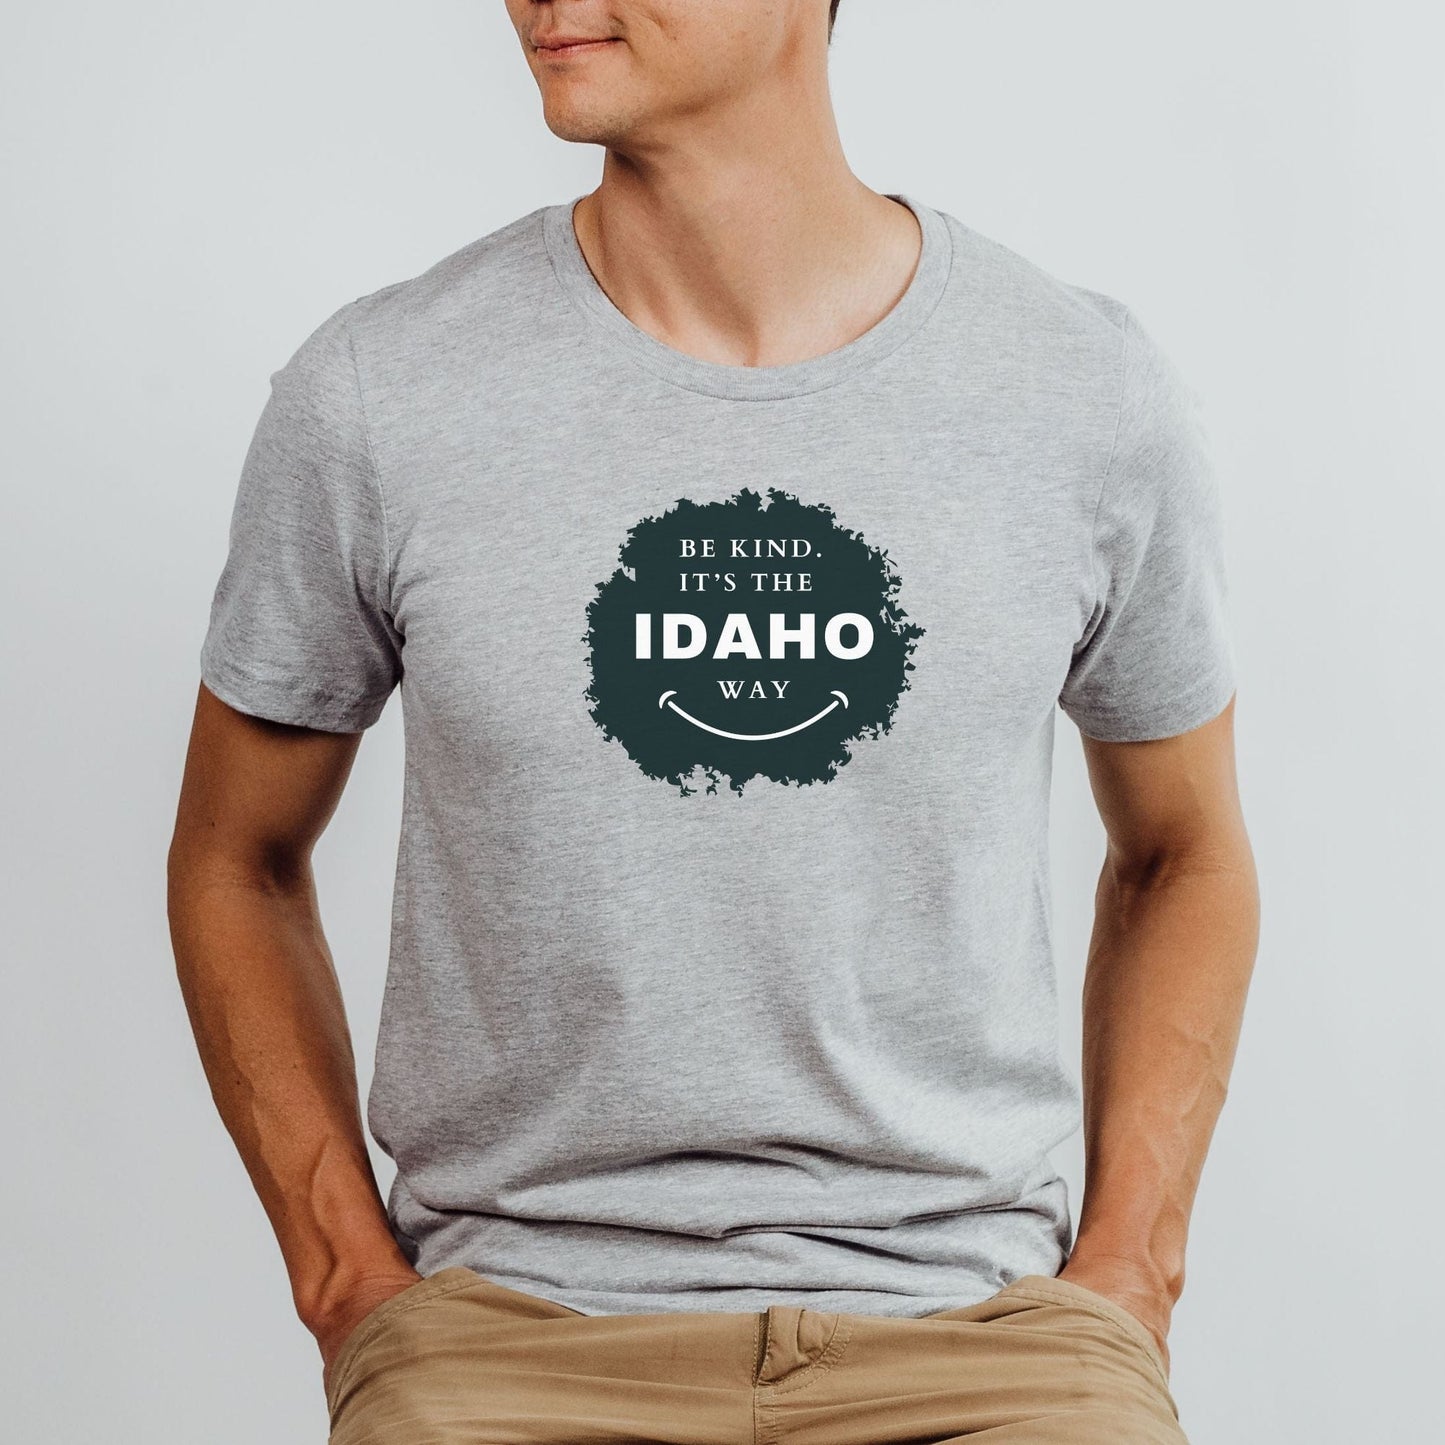 208 Supply Co T-shirt The Idaho Way Unisex Tee